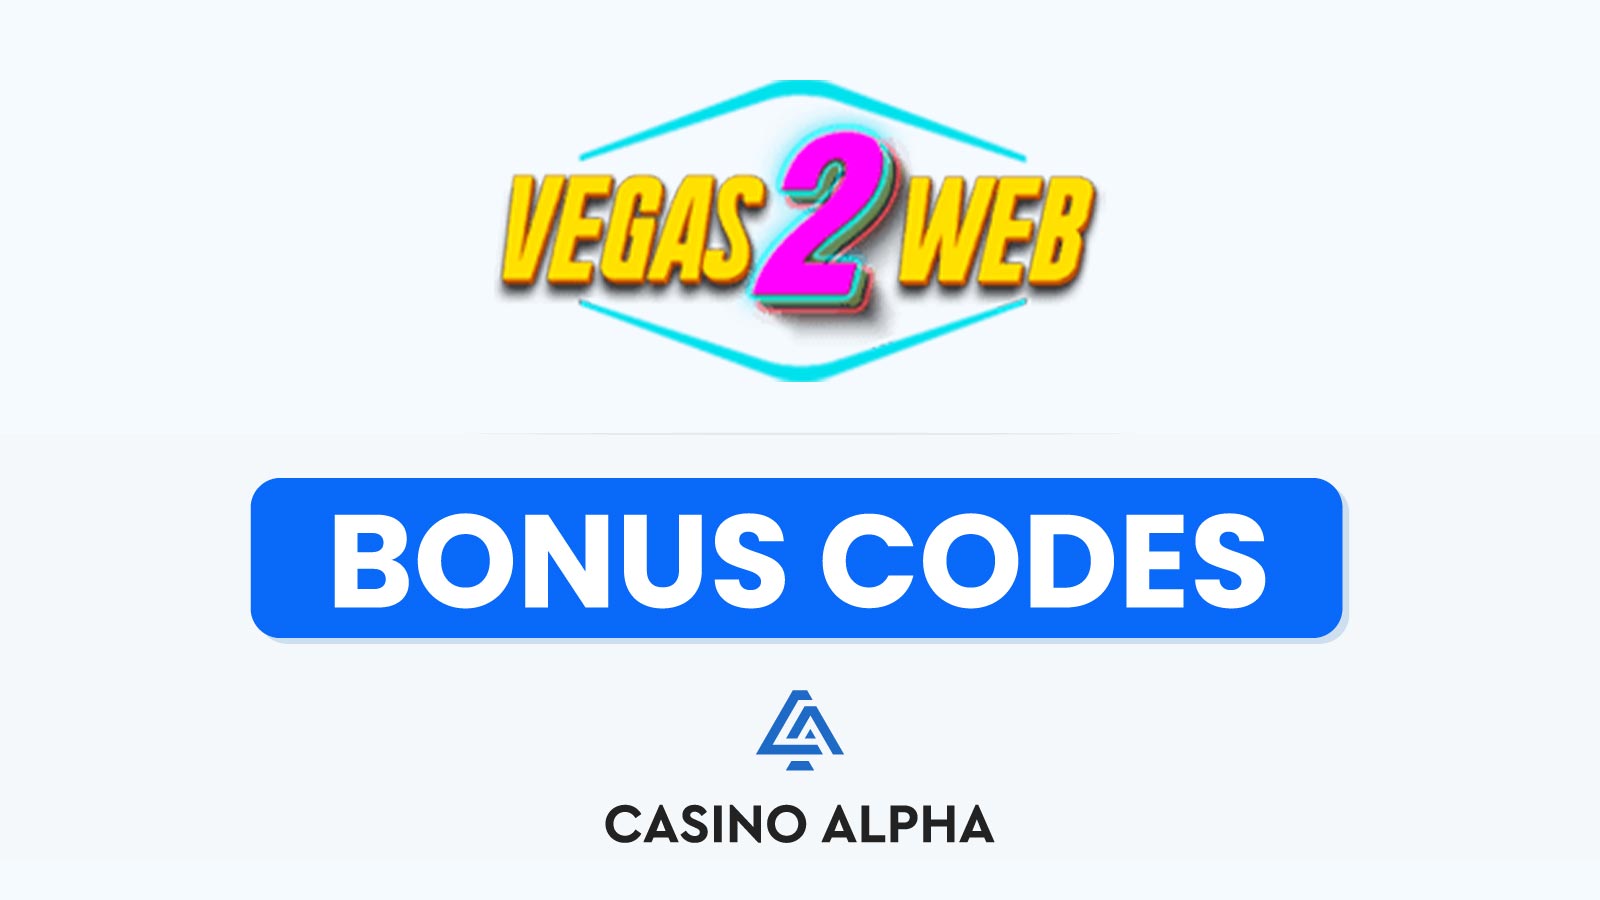 vegasweb no deposit bonus